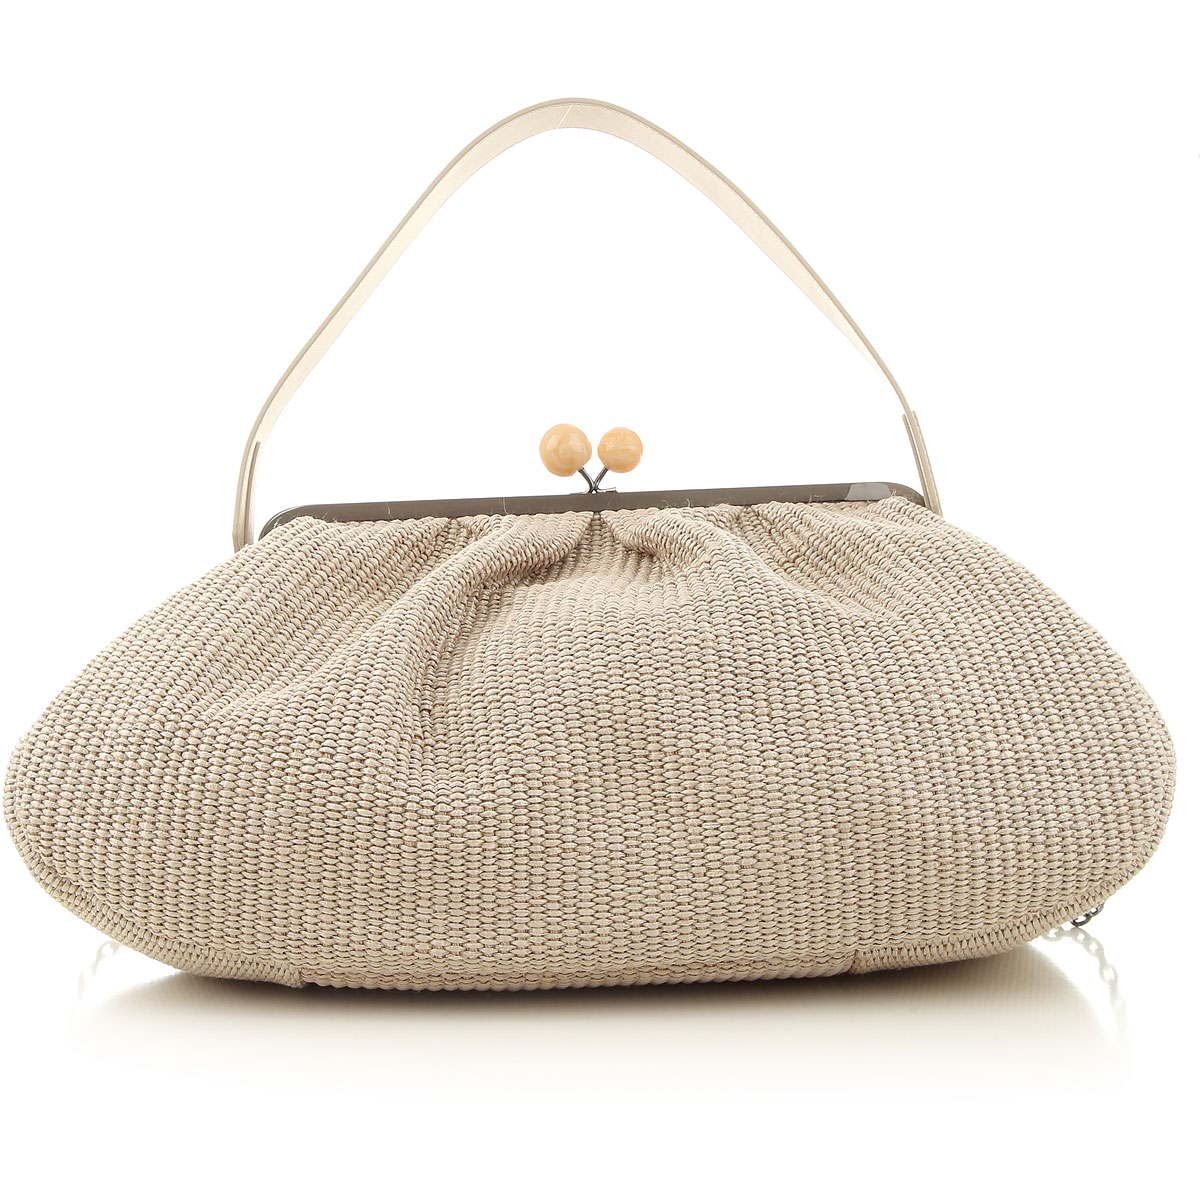 Handbags Max Mara, Style code: 55110714-nabarro-002